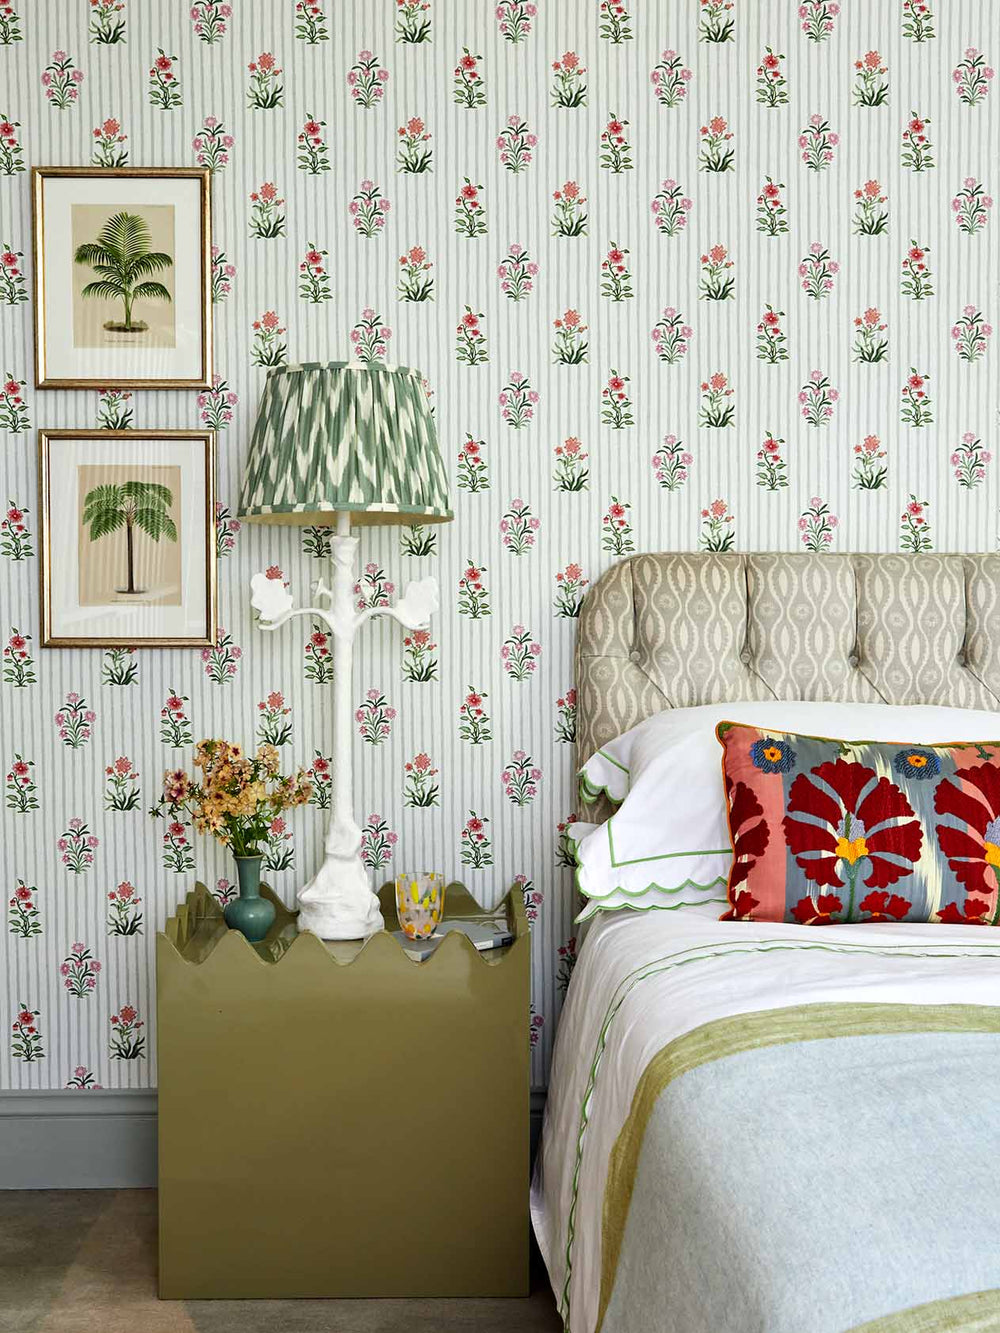 dado-atelier-bindi-flower-wallpaper-sae-pink-bedroom-stripe-floral-printed-design-made-in-england